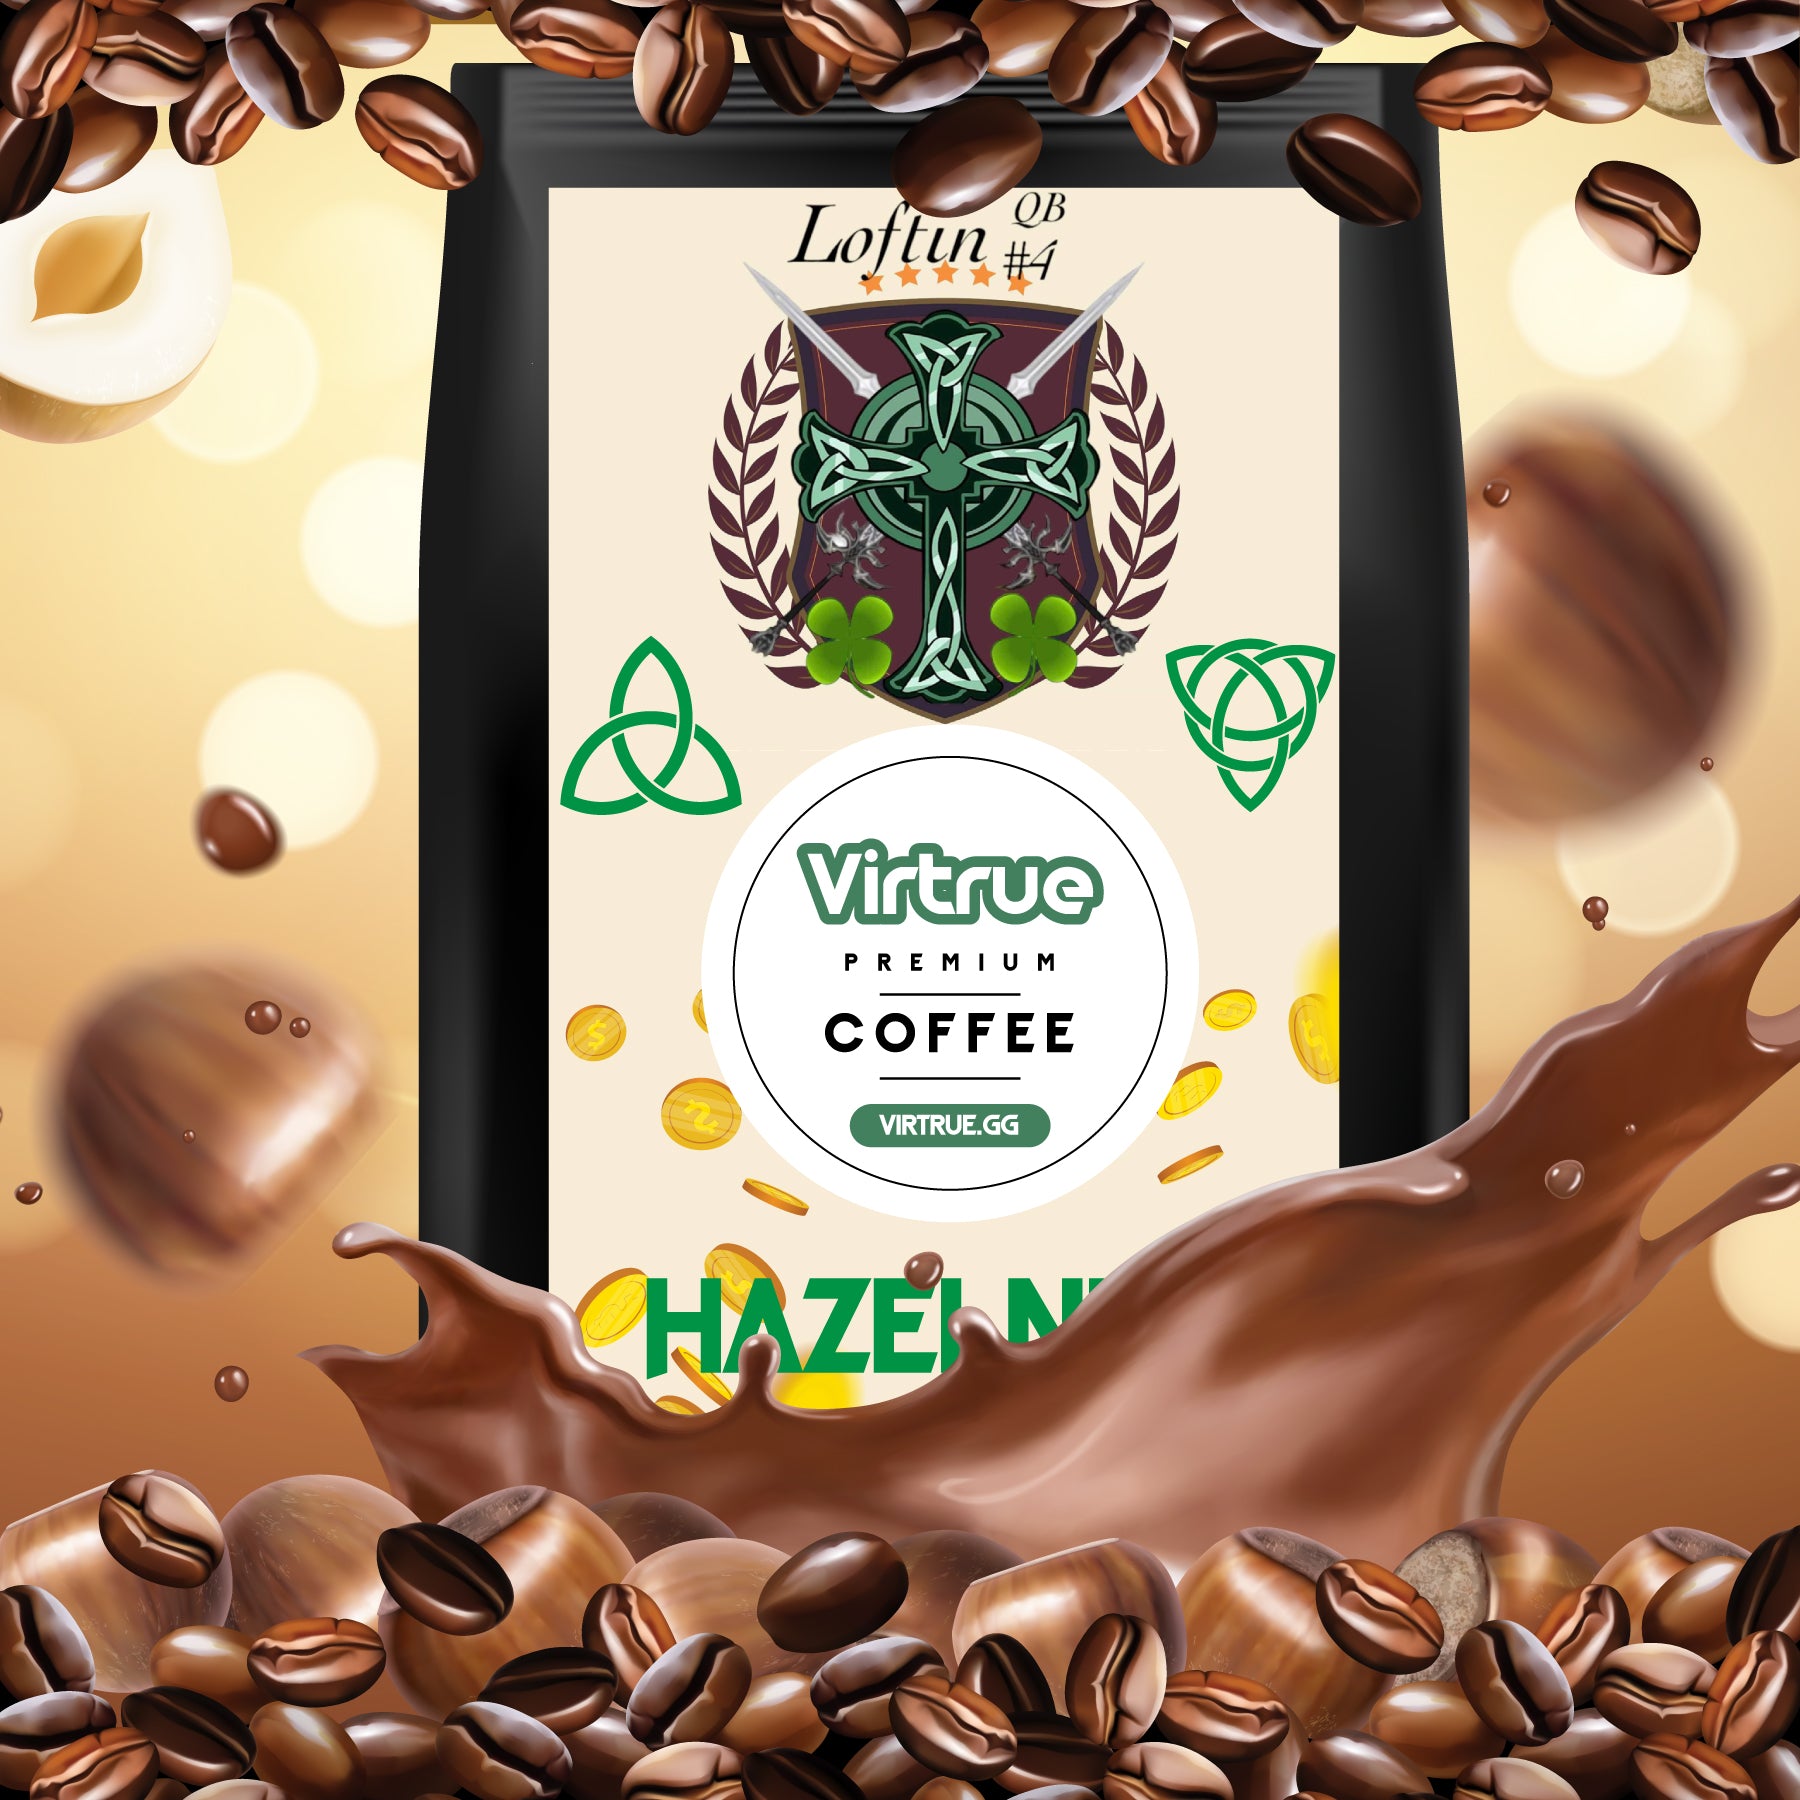 Tim Loftin Flavored Coffee 16oz